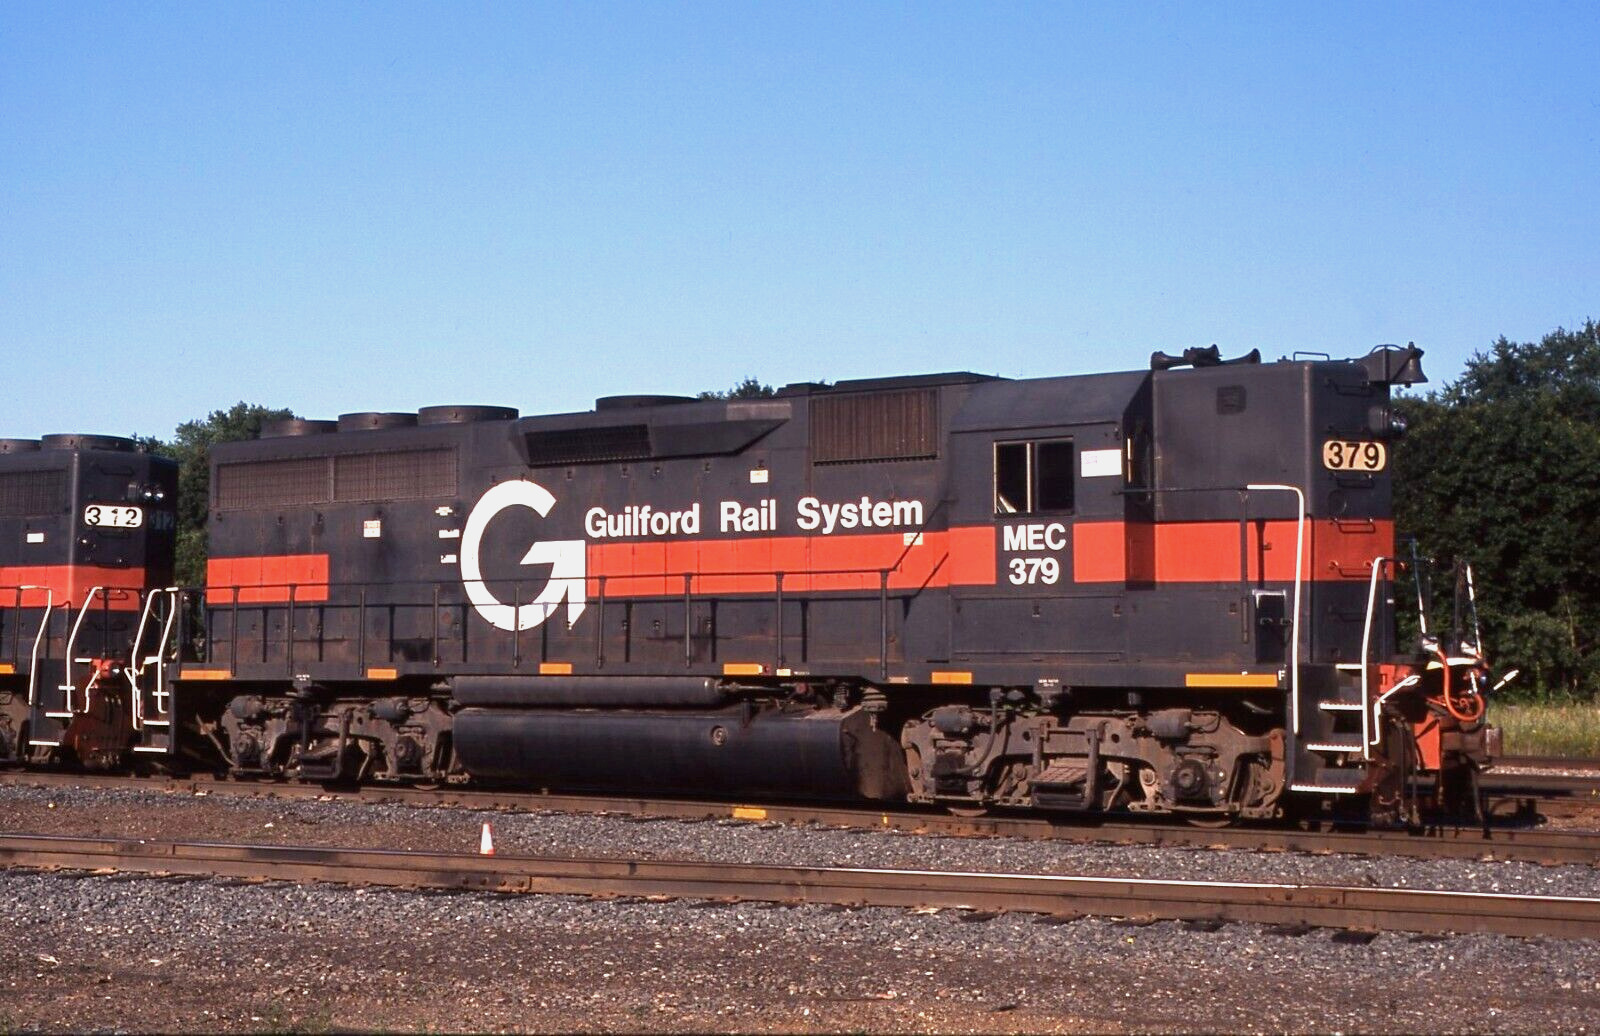 Original Slide: Maine Central / Guilford Rail System GP40 379